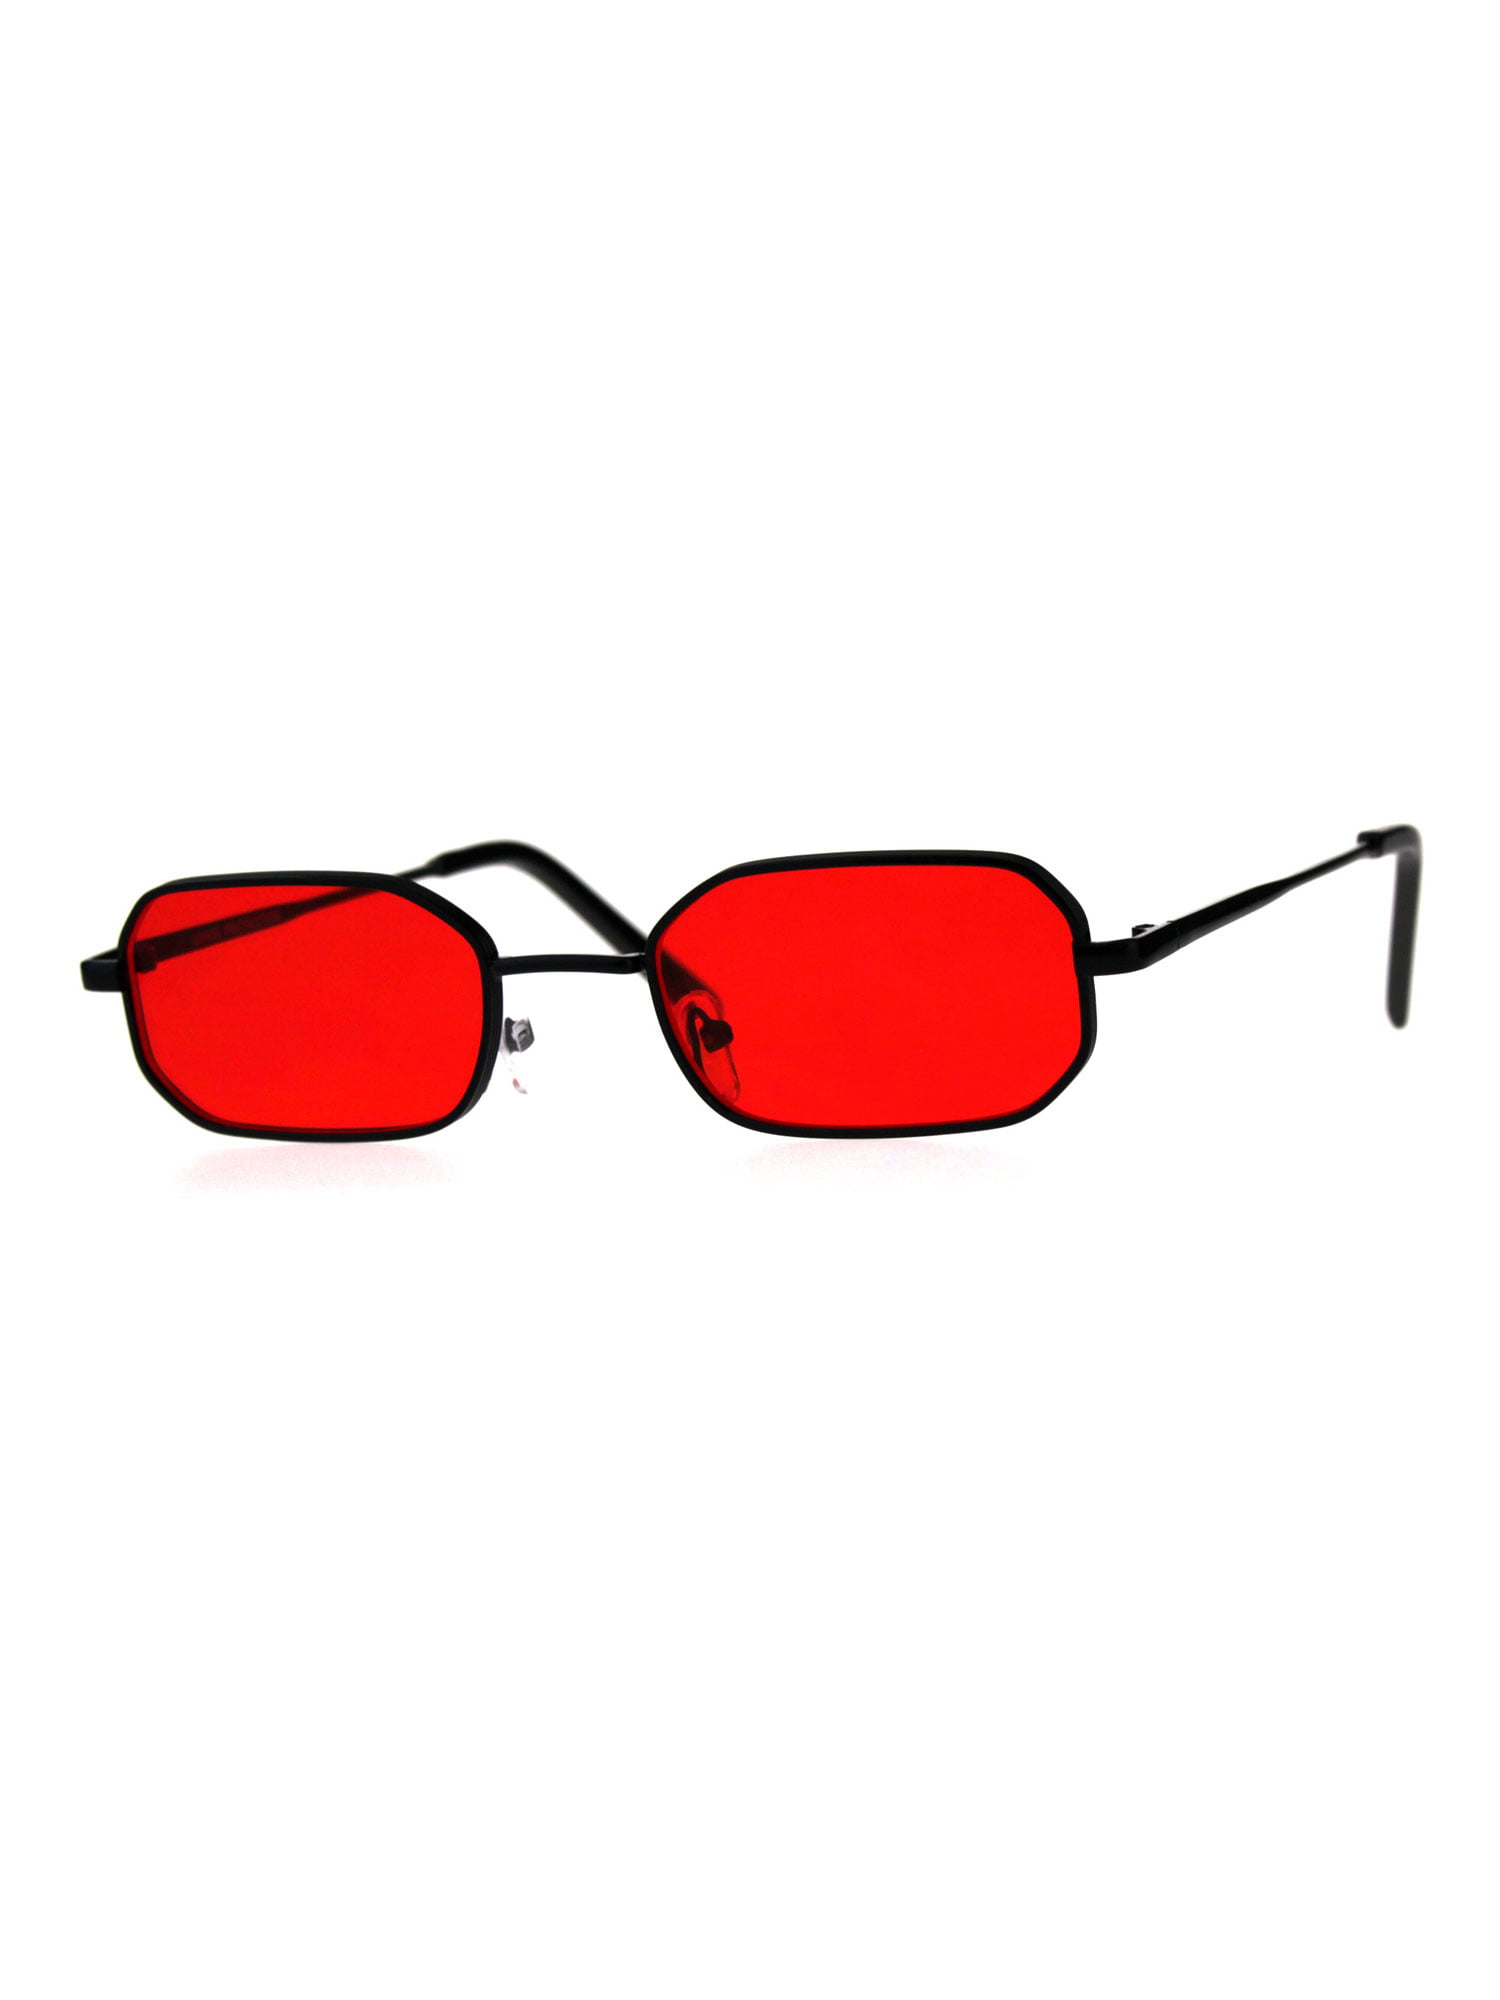 Mens Pop Color Lens Pimp Narrow Rectangular Metal Rim Sunglasses Black Red